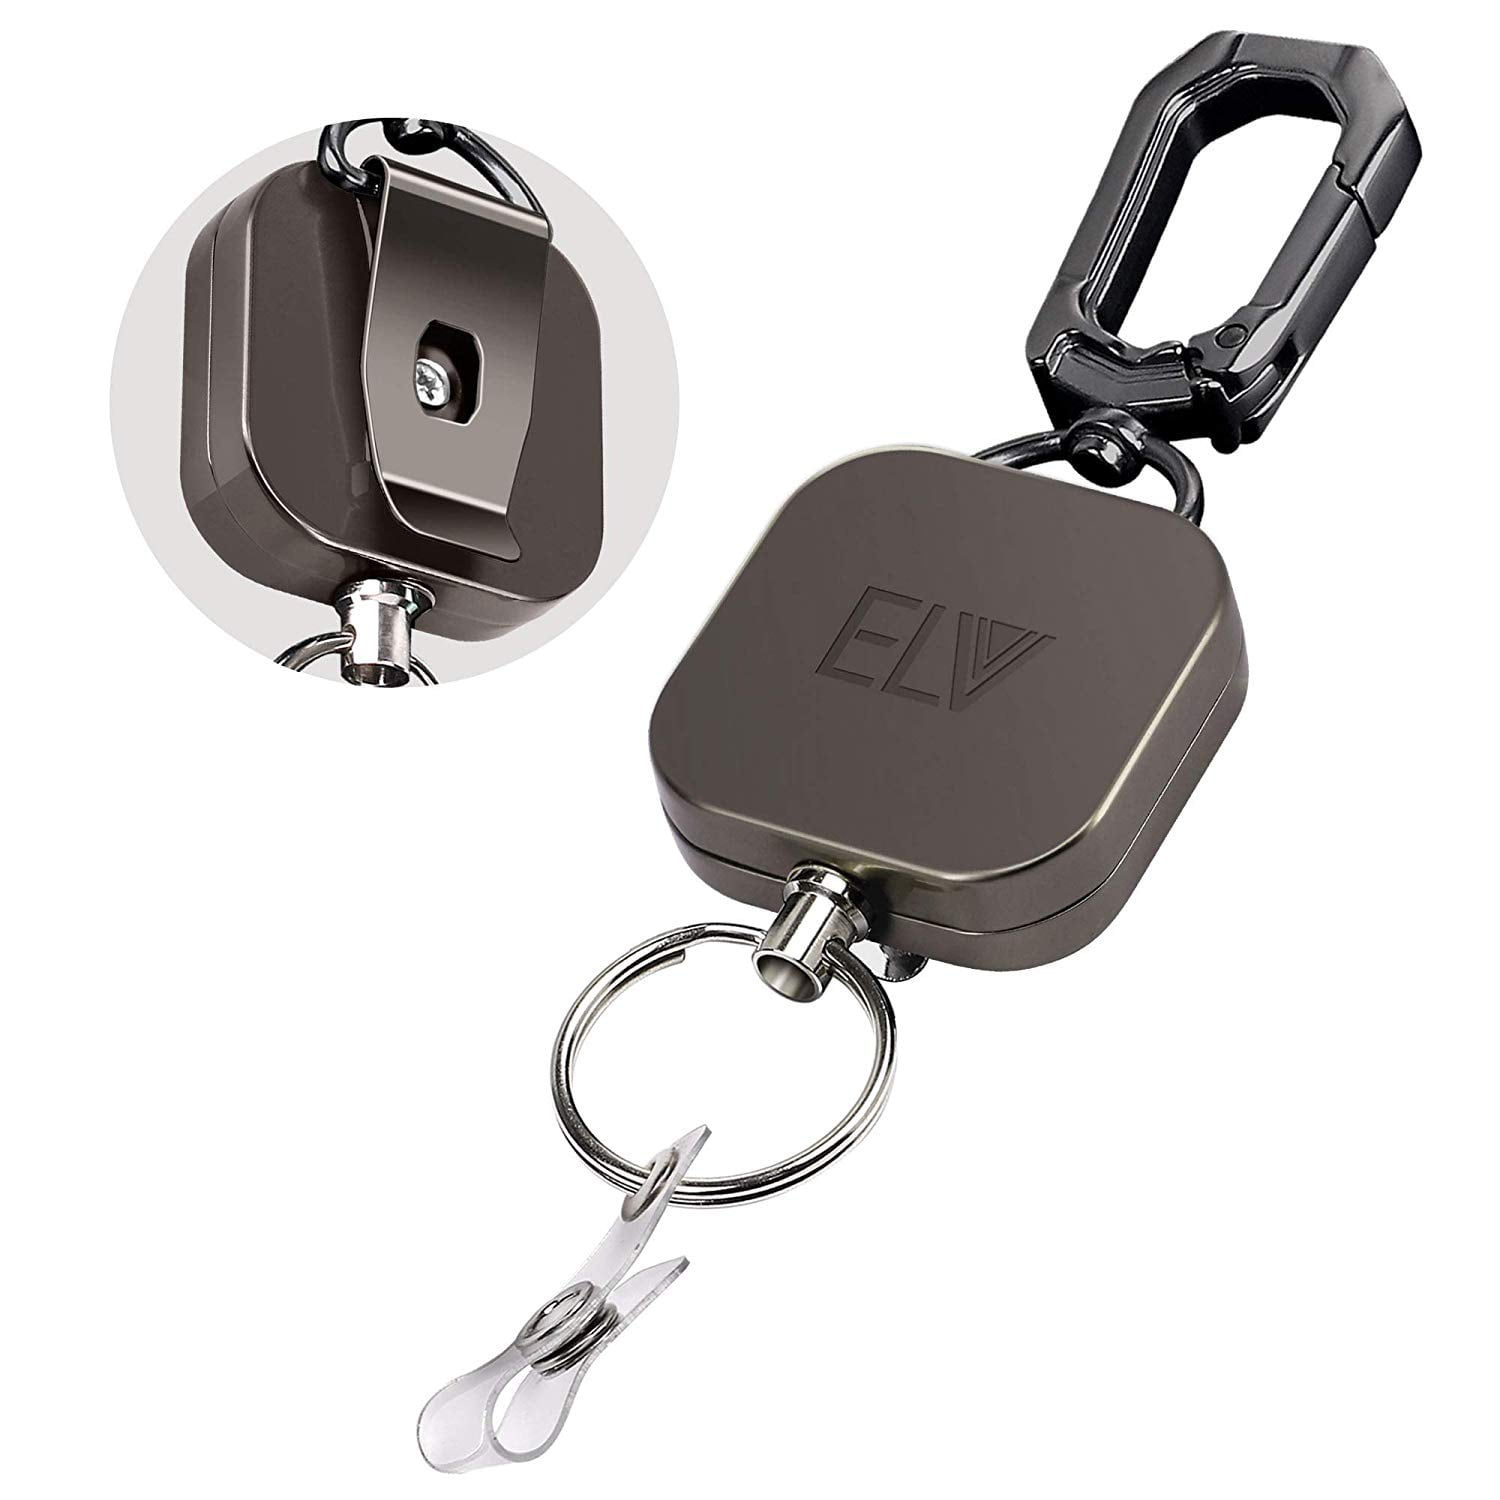  ELV Retractable ID Badge Holder, Heavy Duty Metal Body